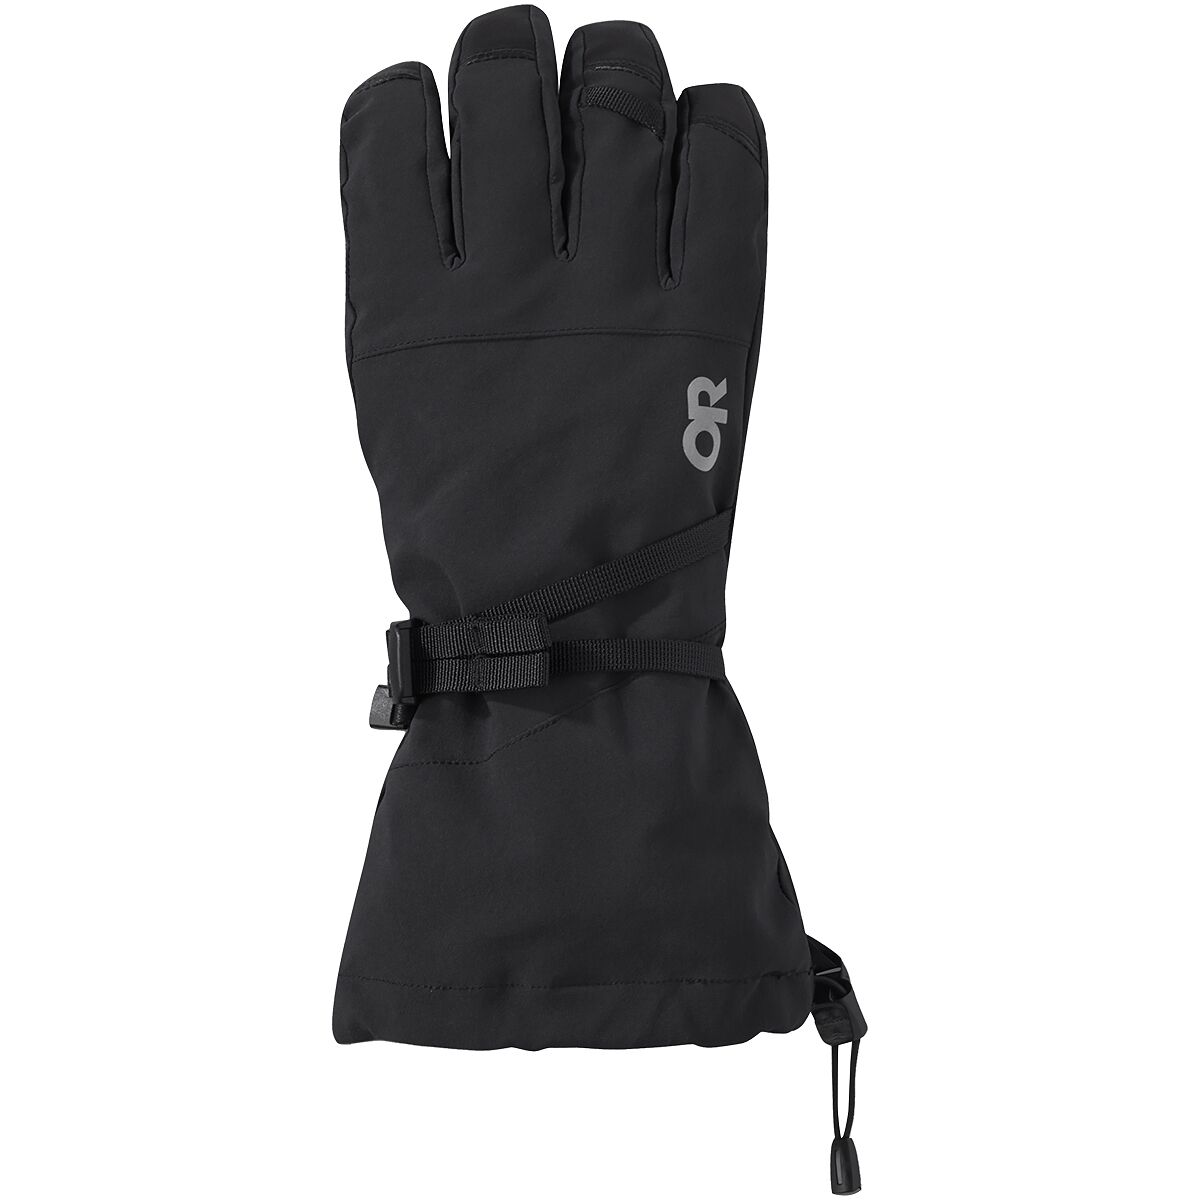 Outdoor Research RadiantX Glove